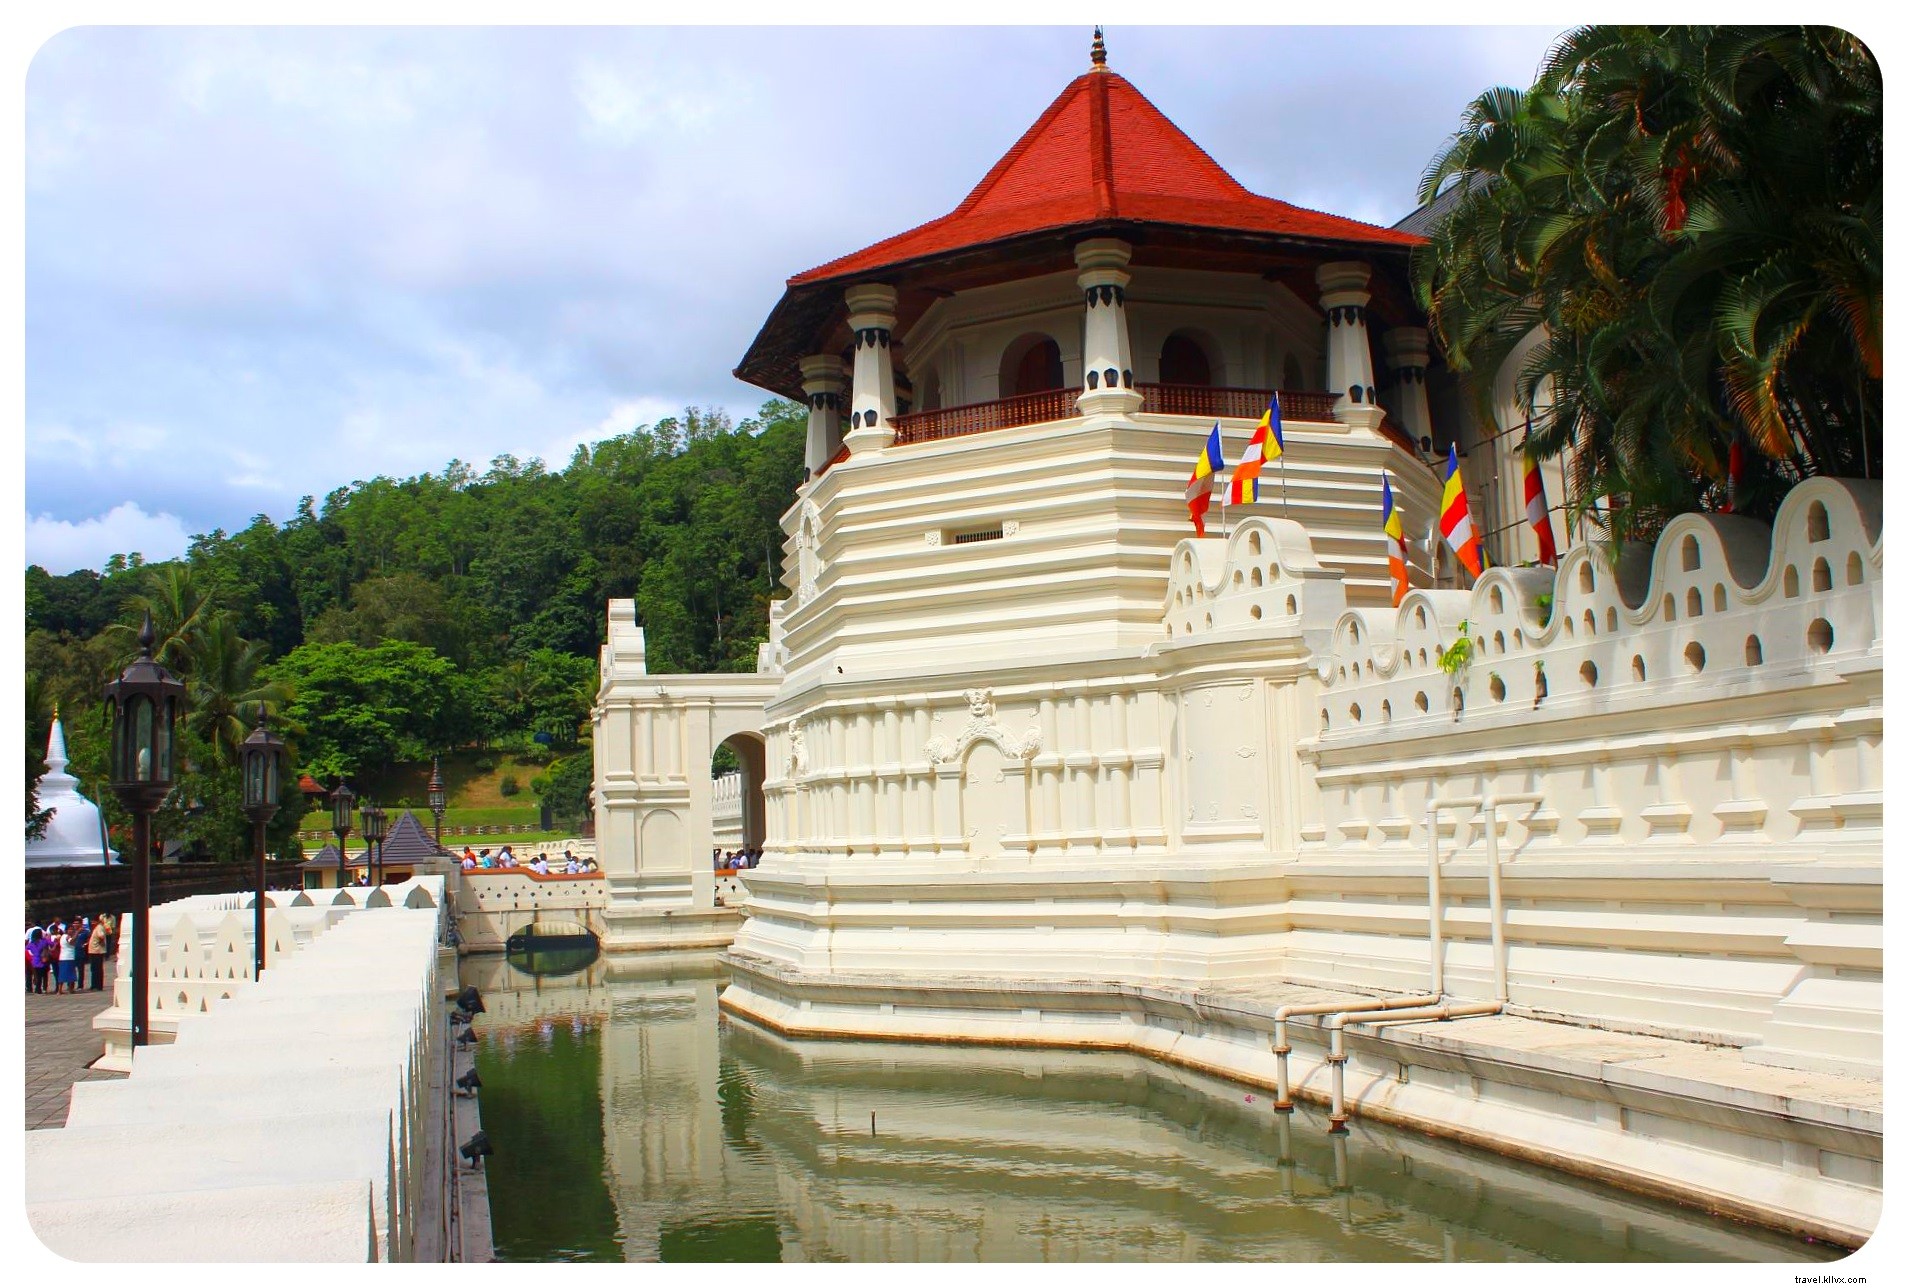 Na trilha CINNAMON no Sri Lanka:Minha sugestão de itinerário no Sri Lanka